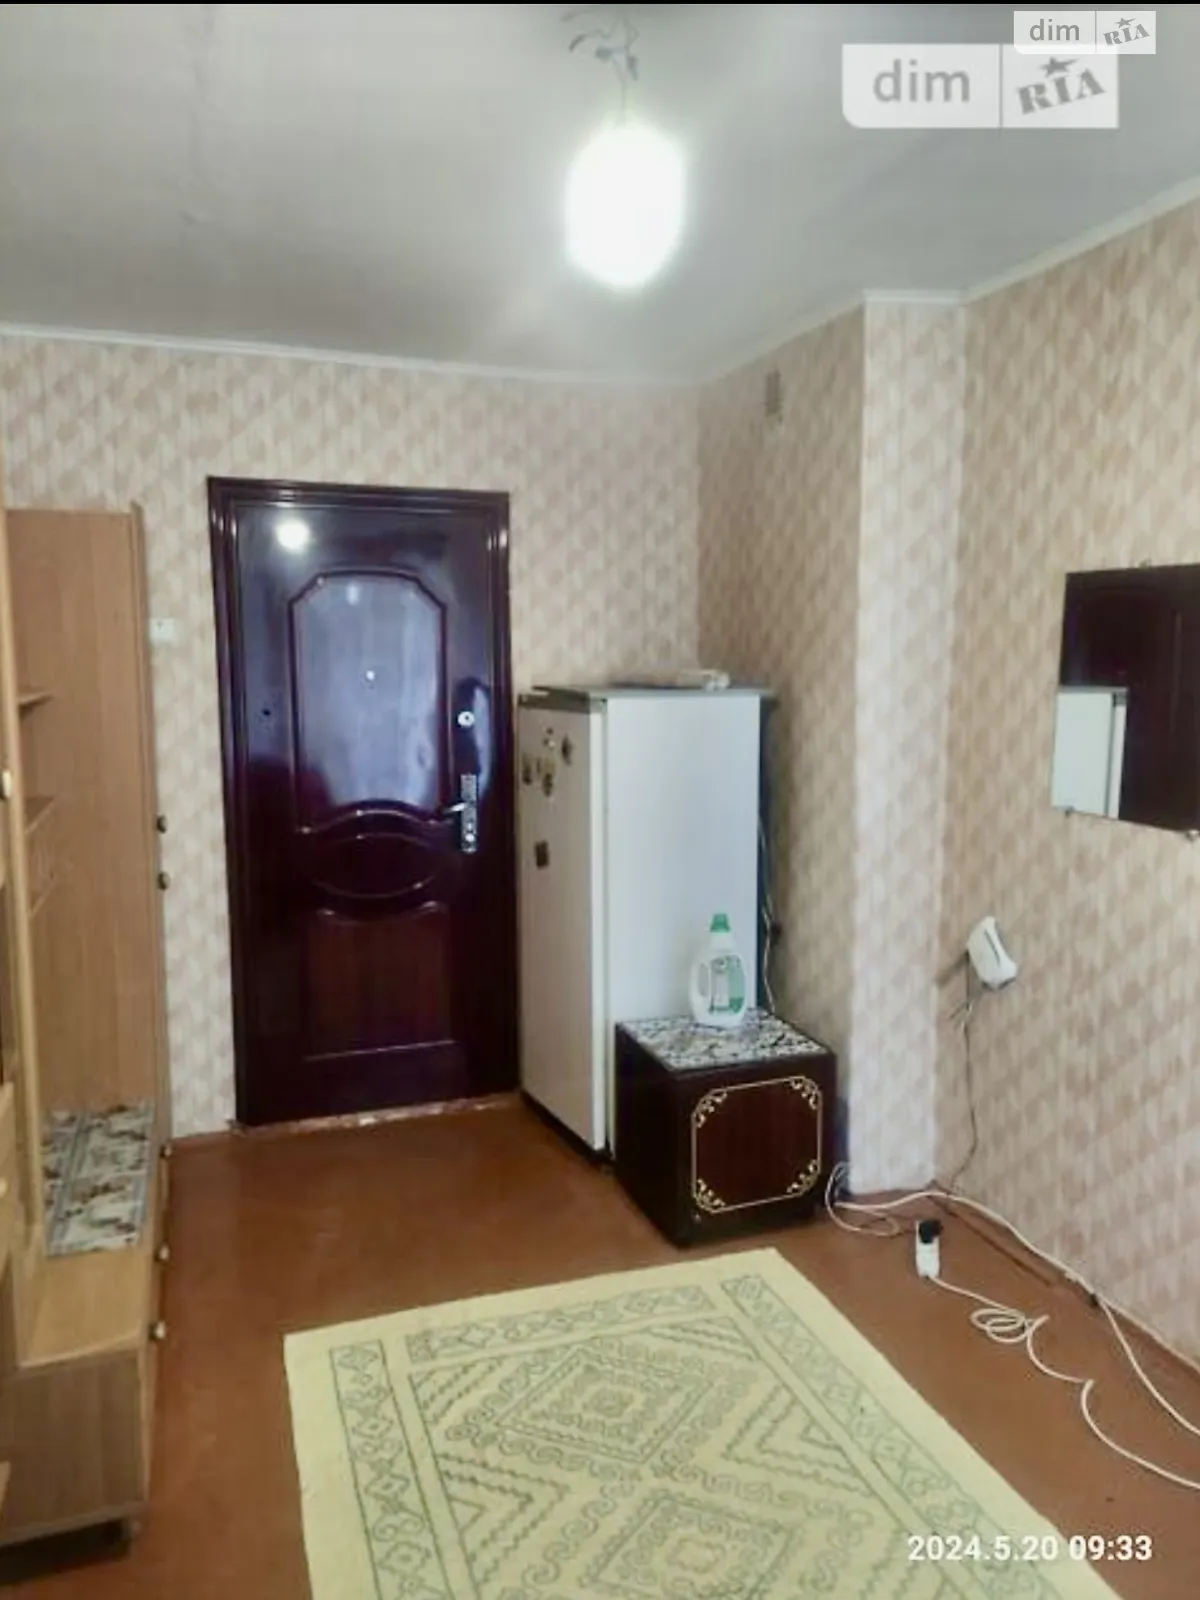 Продается комната 15 кв. м в Ровно, цена: 8900 $